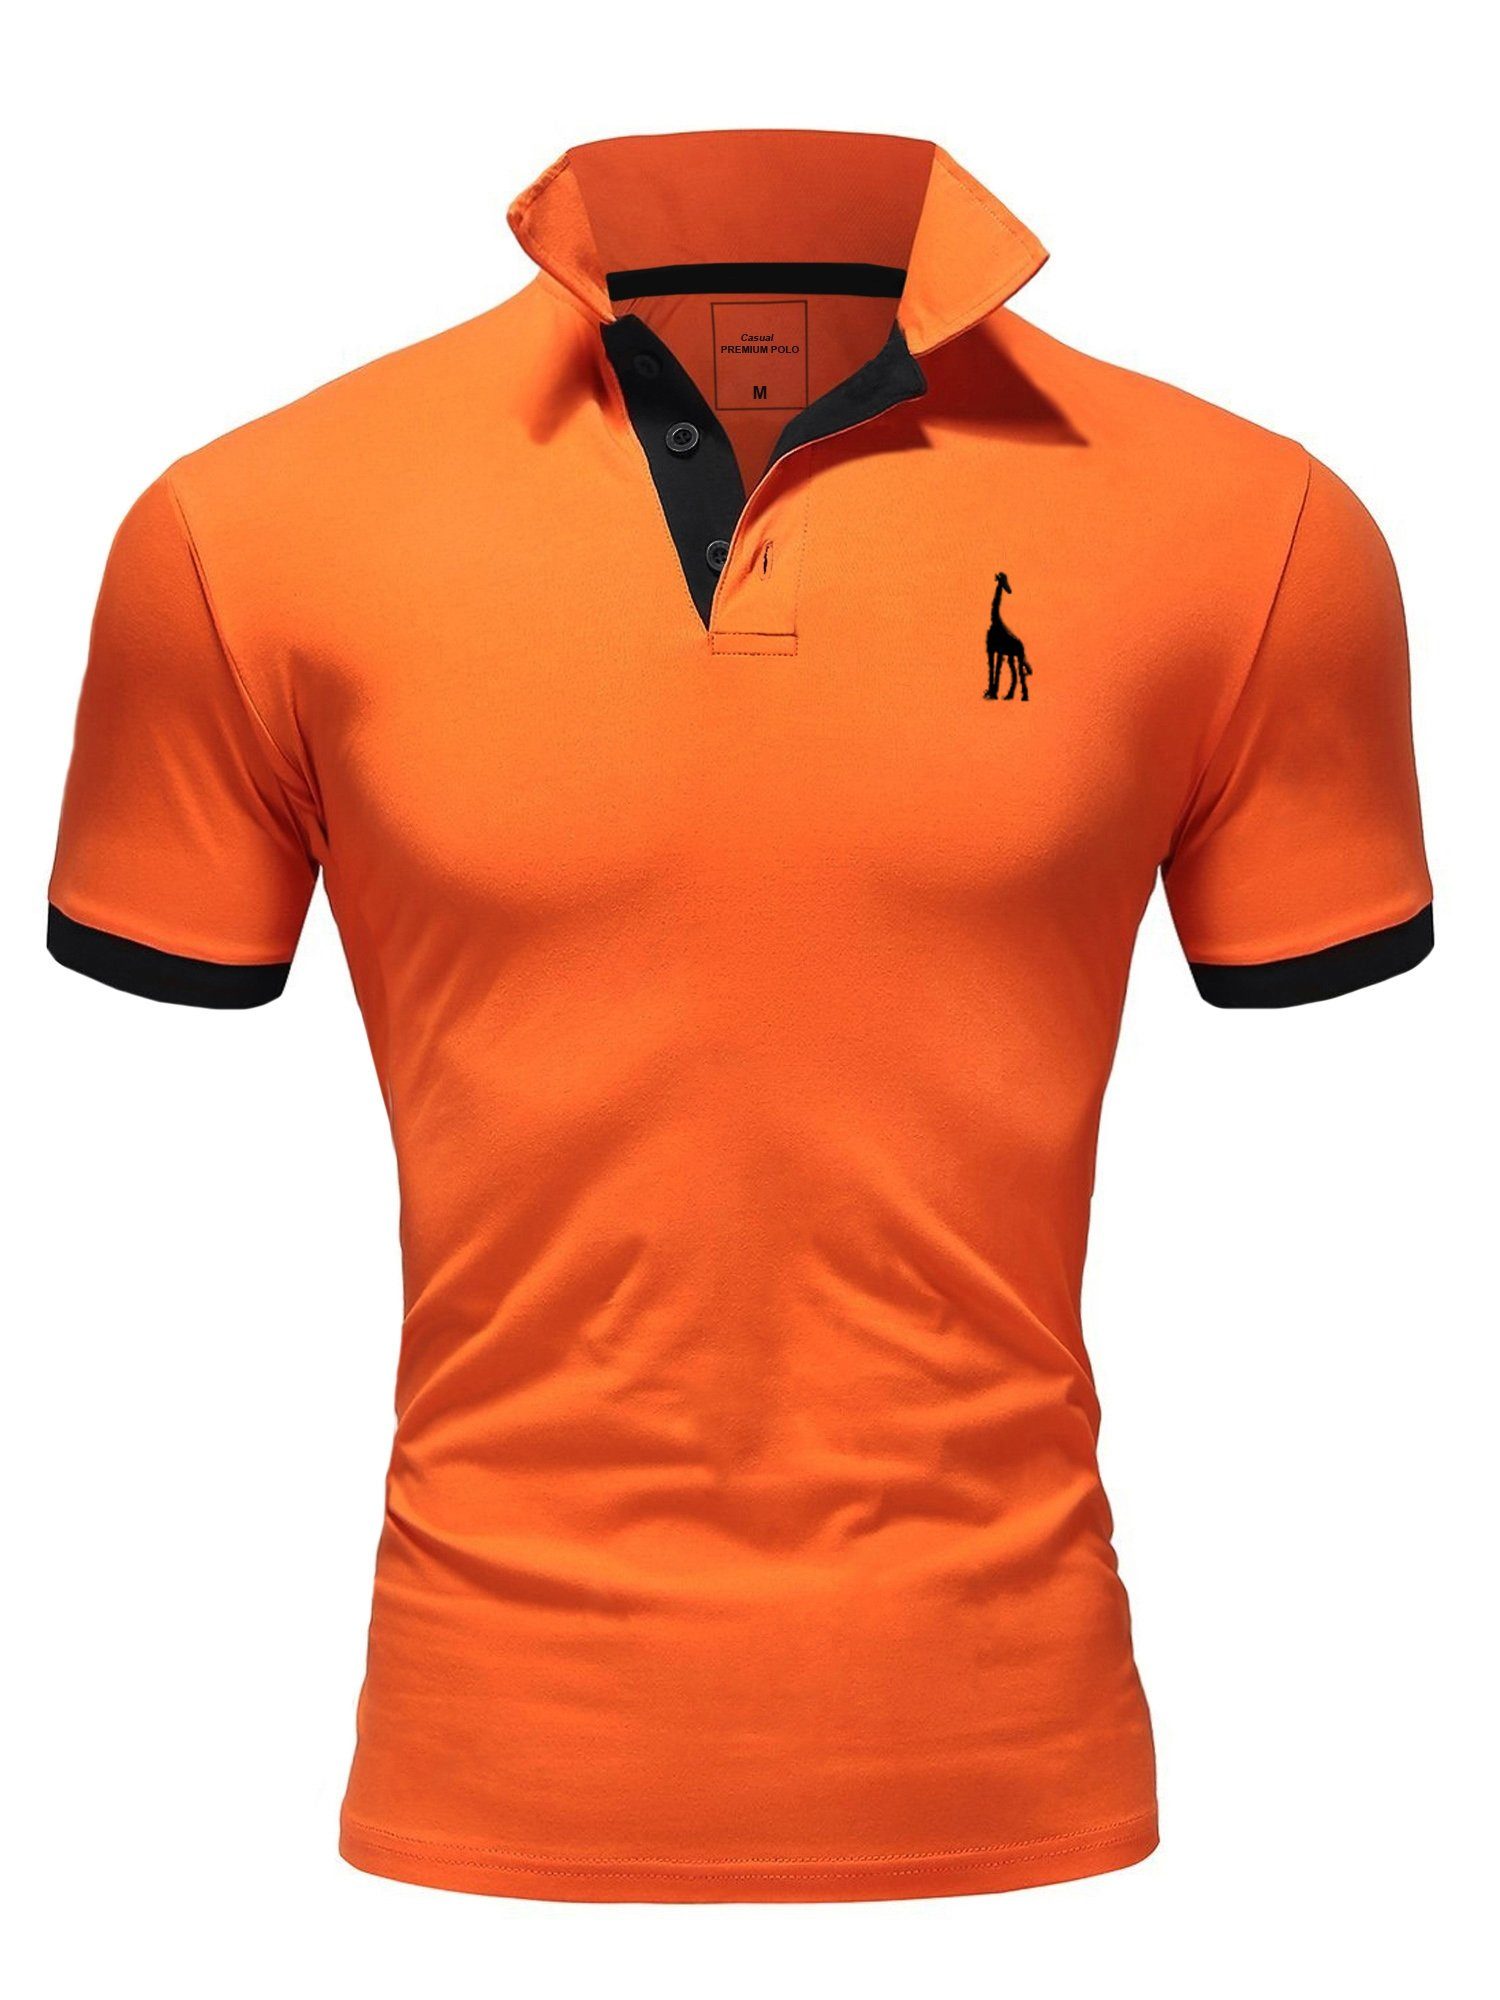 JOSEPH Basic Poloshirt Hemd Herren Orange/Schwarz Kontrast Kurzarm REPUBLIX Polo